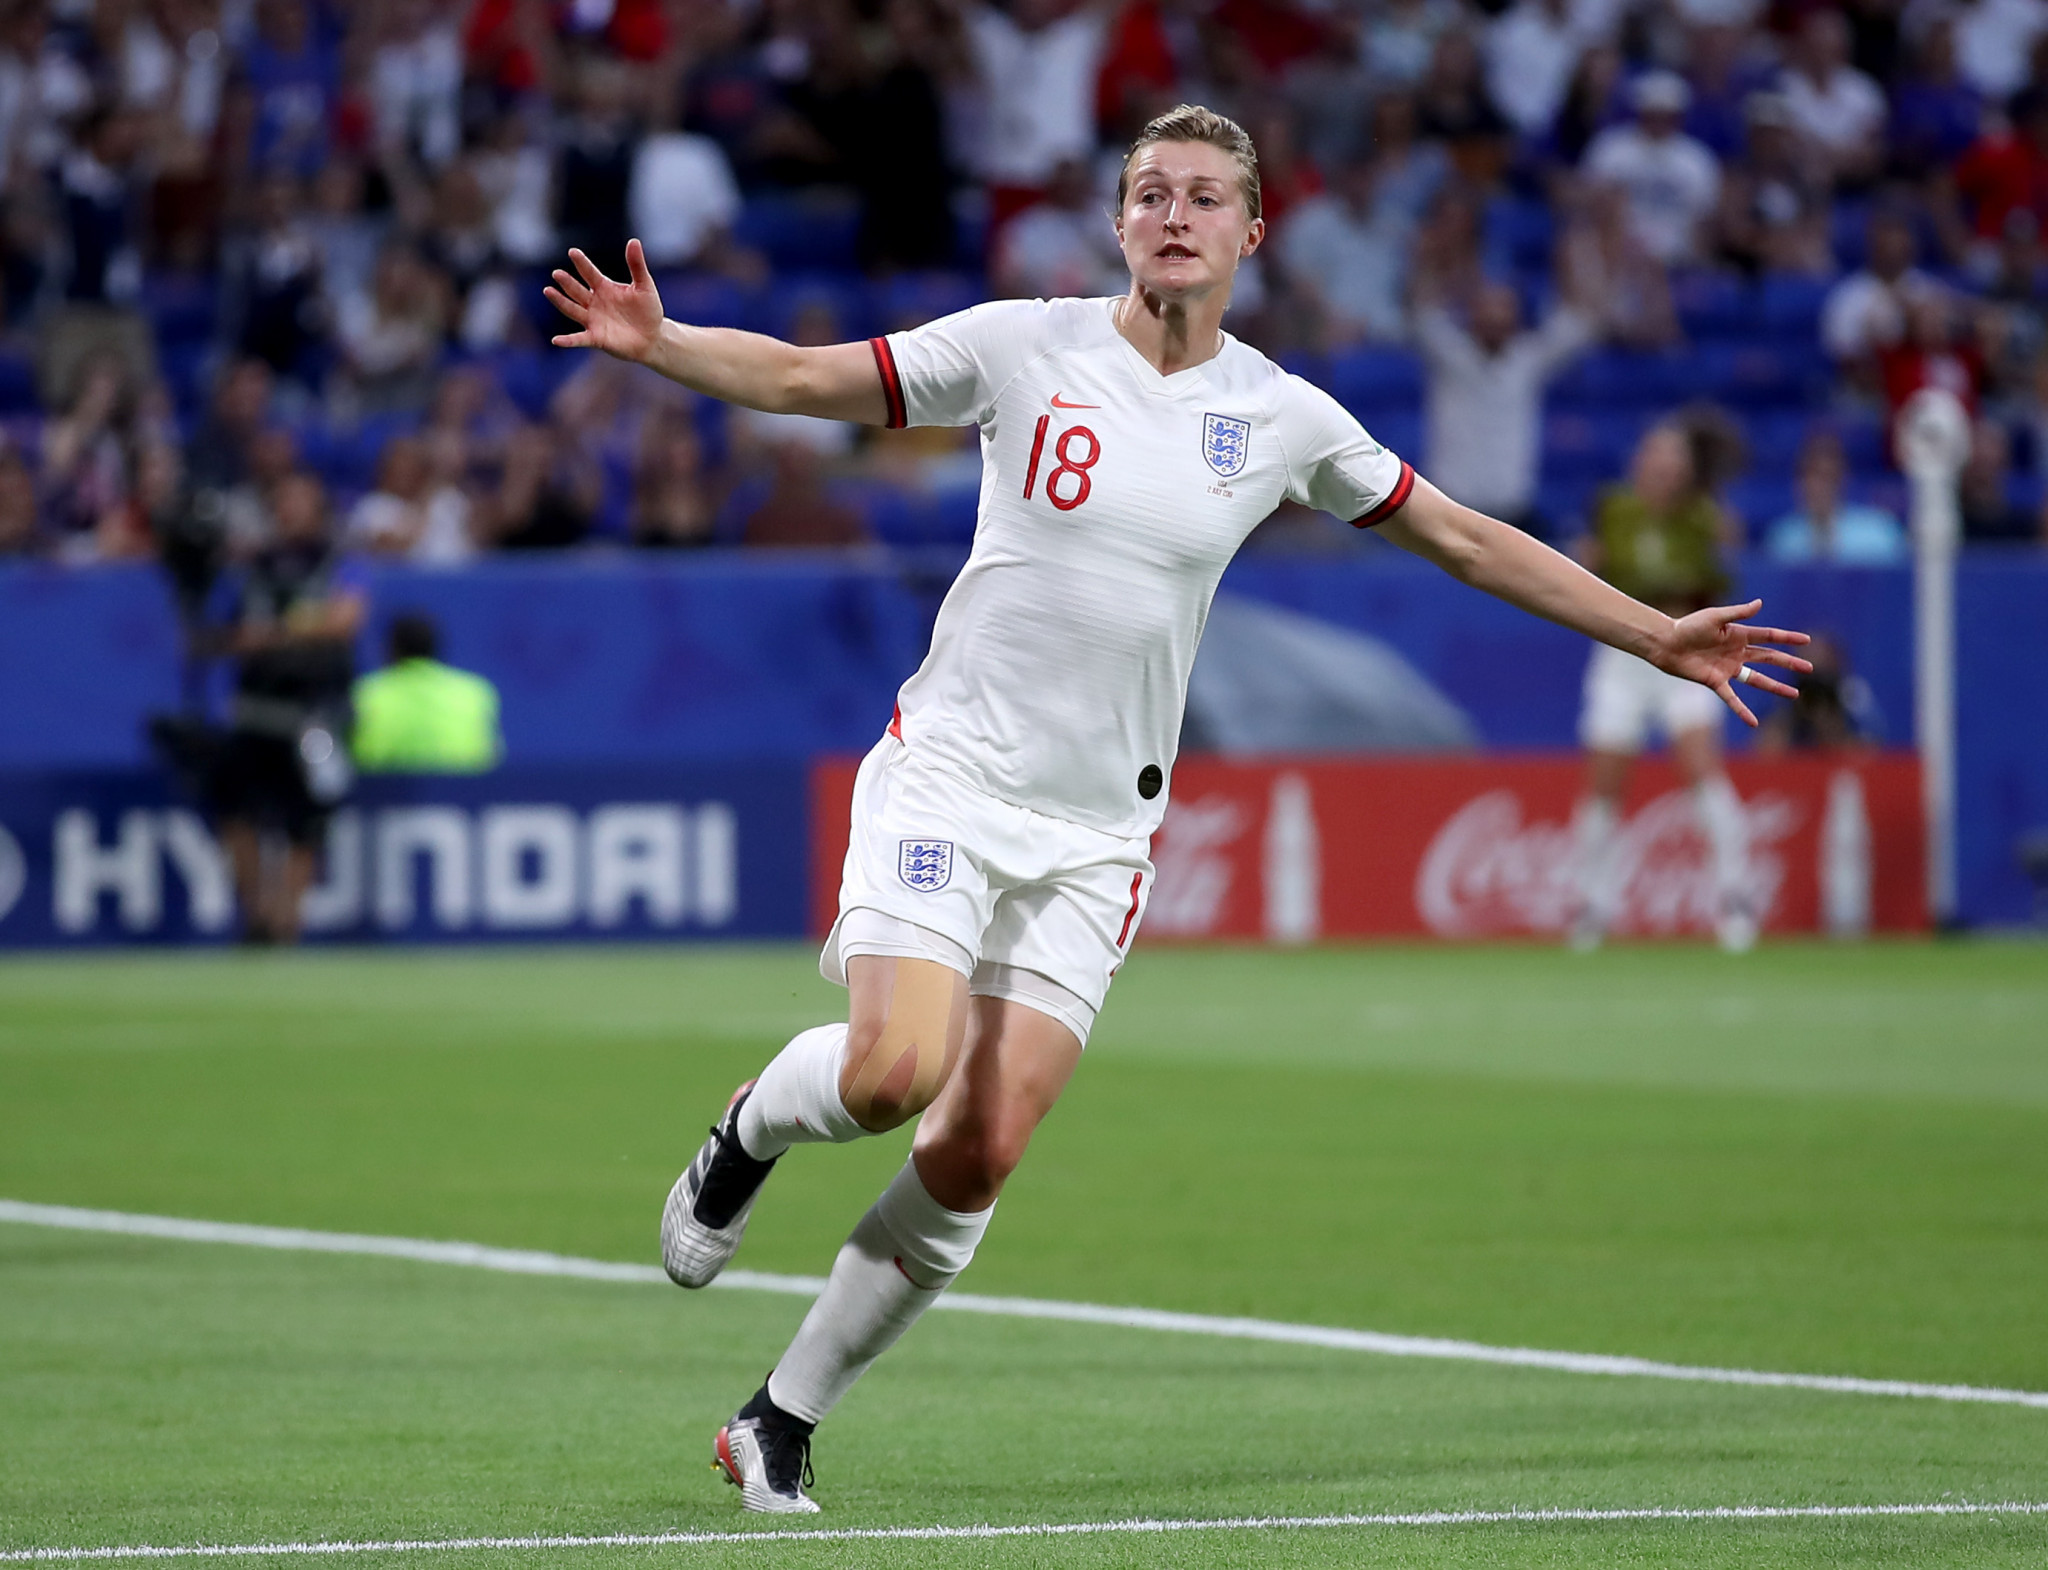 Ellen White's deft finish restored parity for England nine minutes later